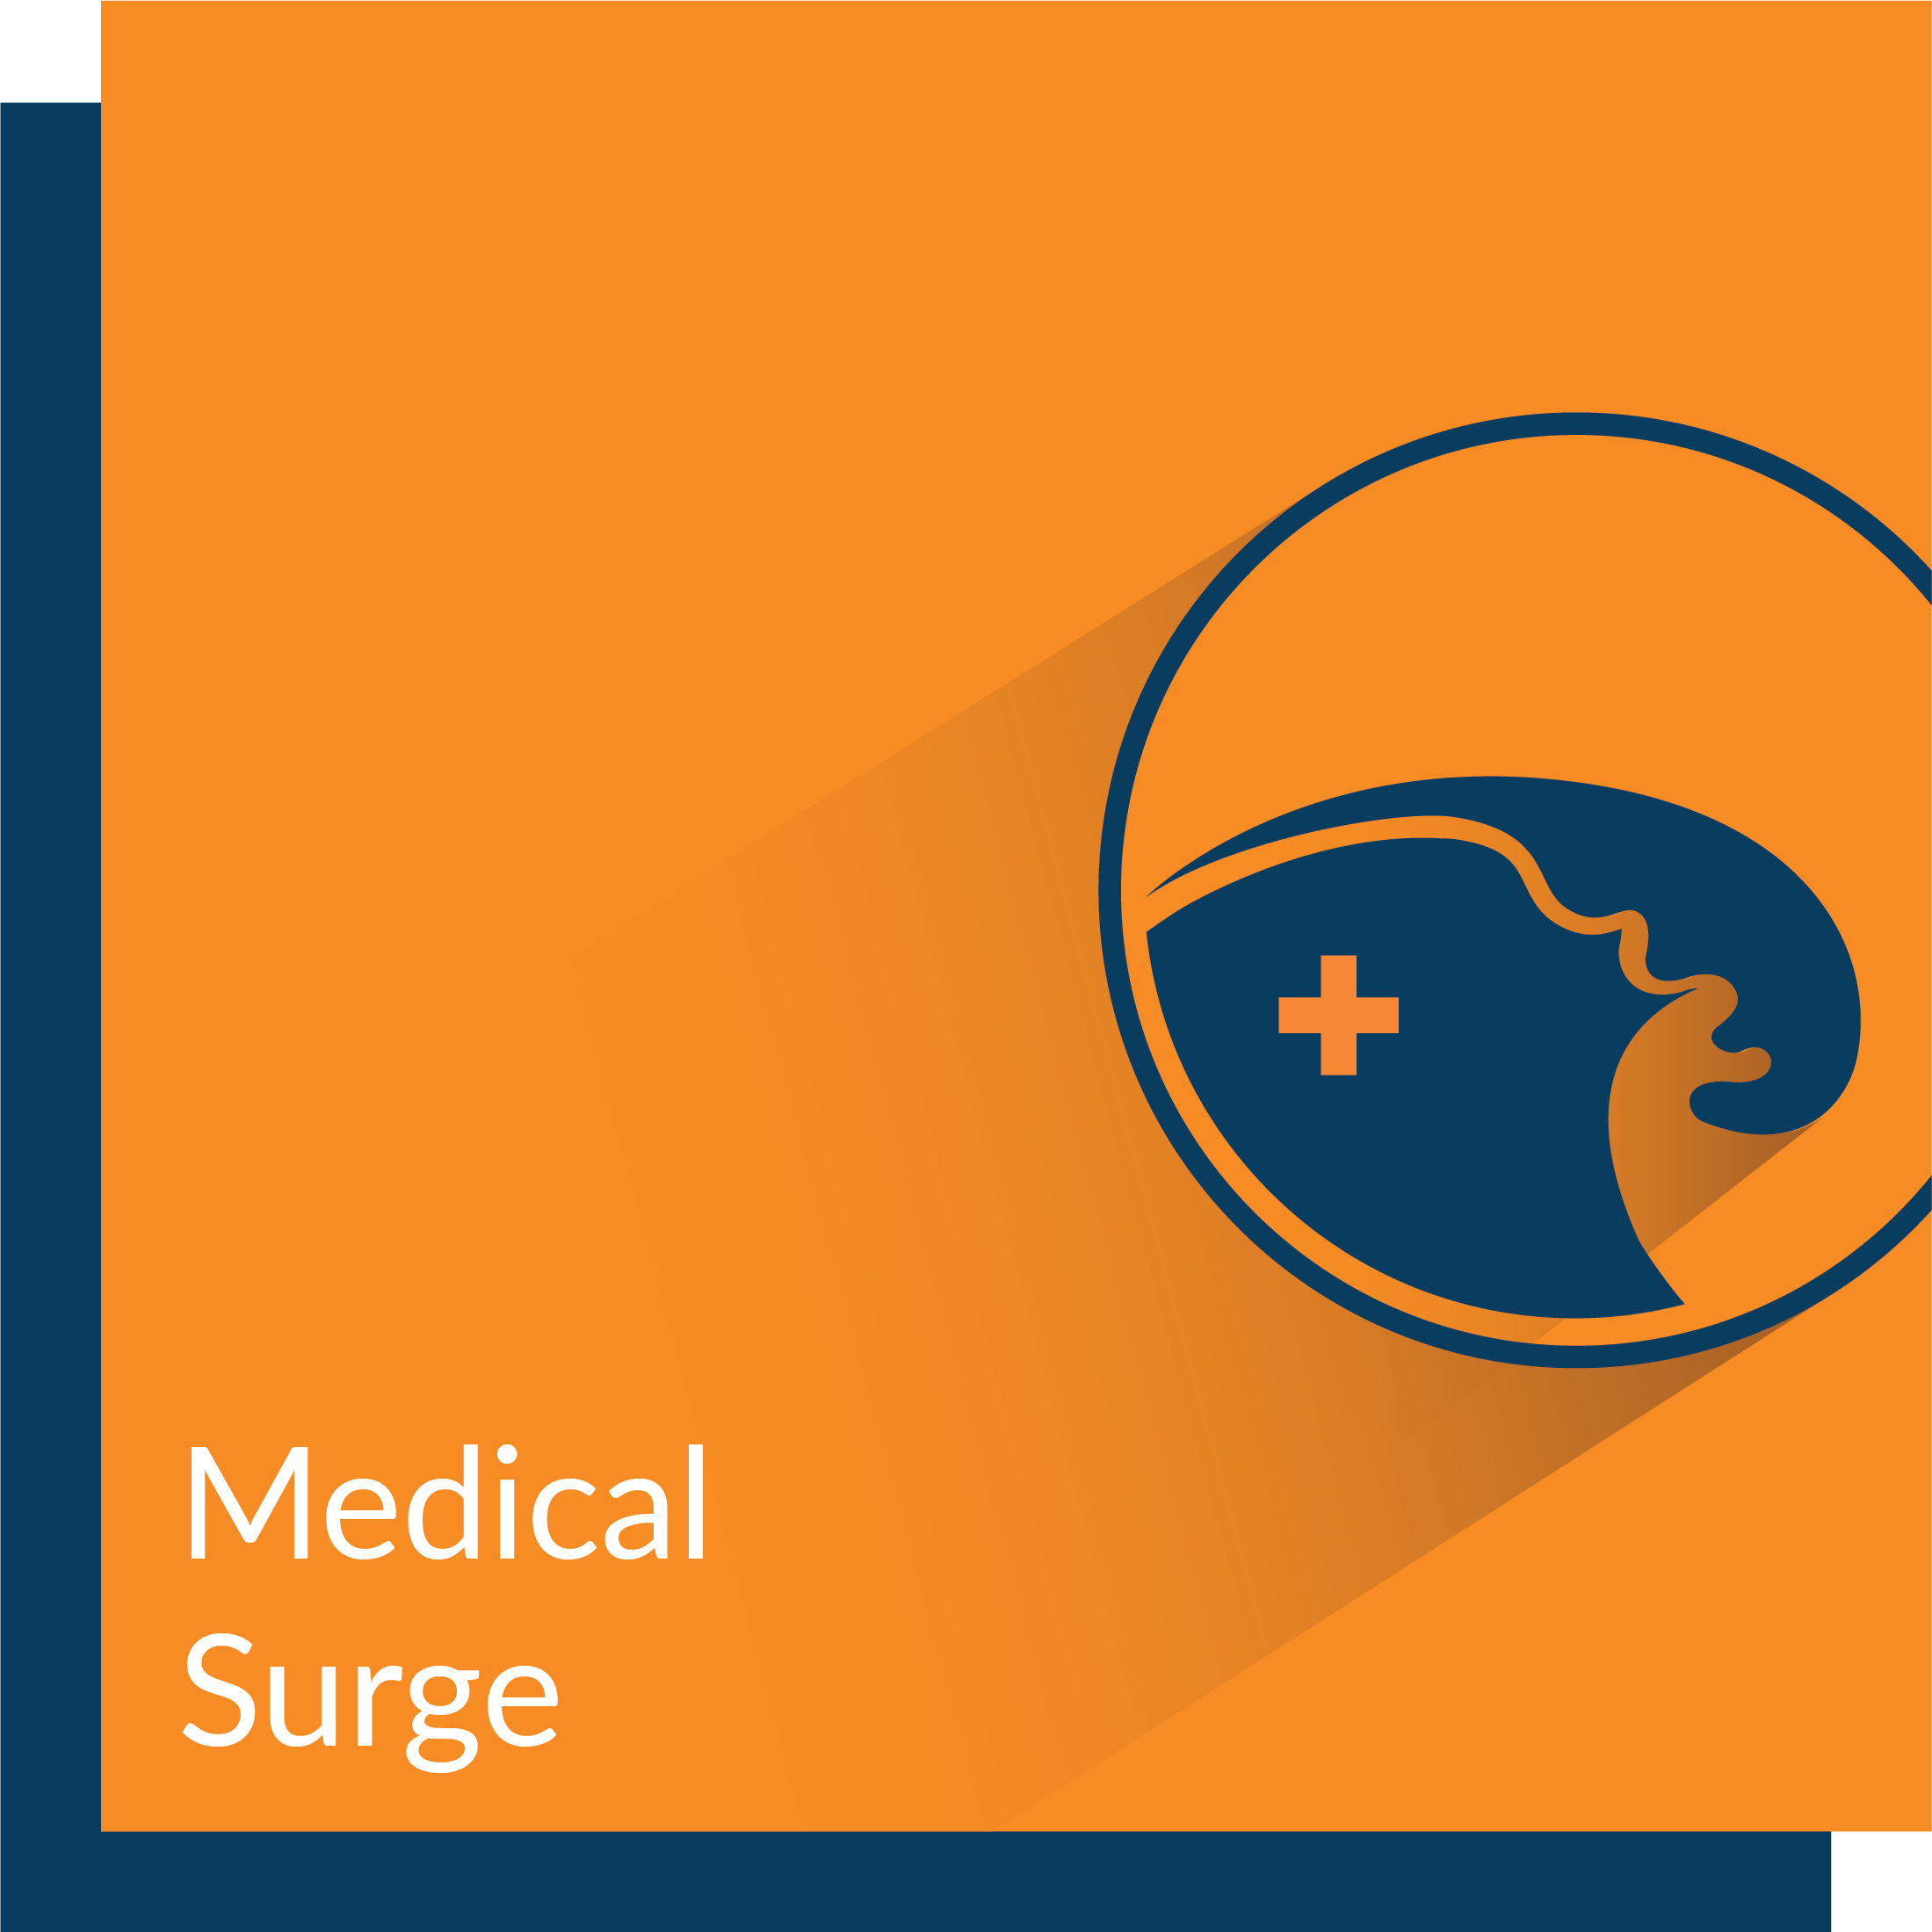 Medical Surge